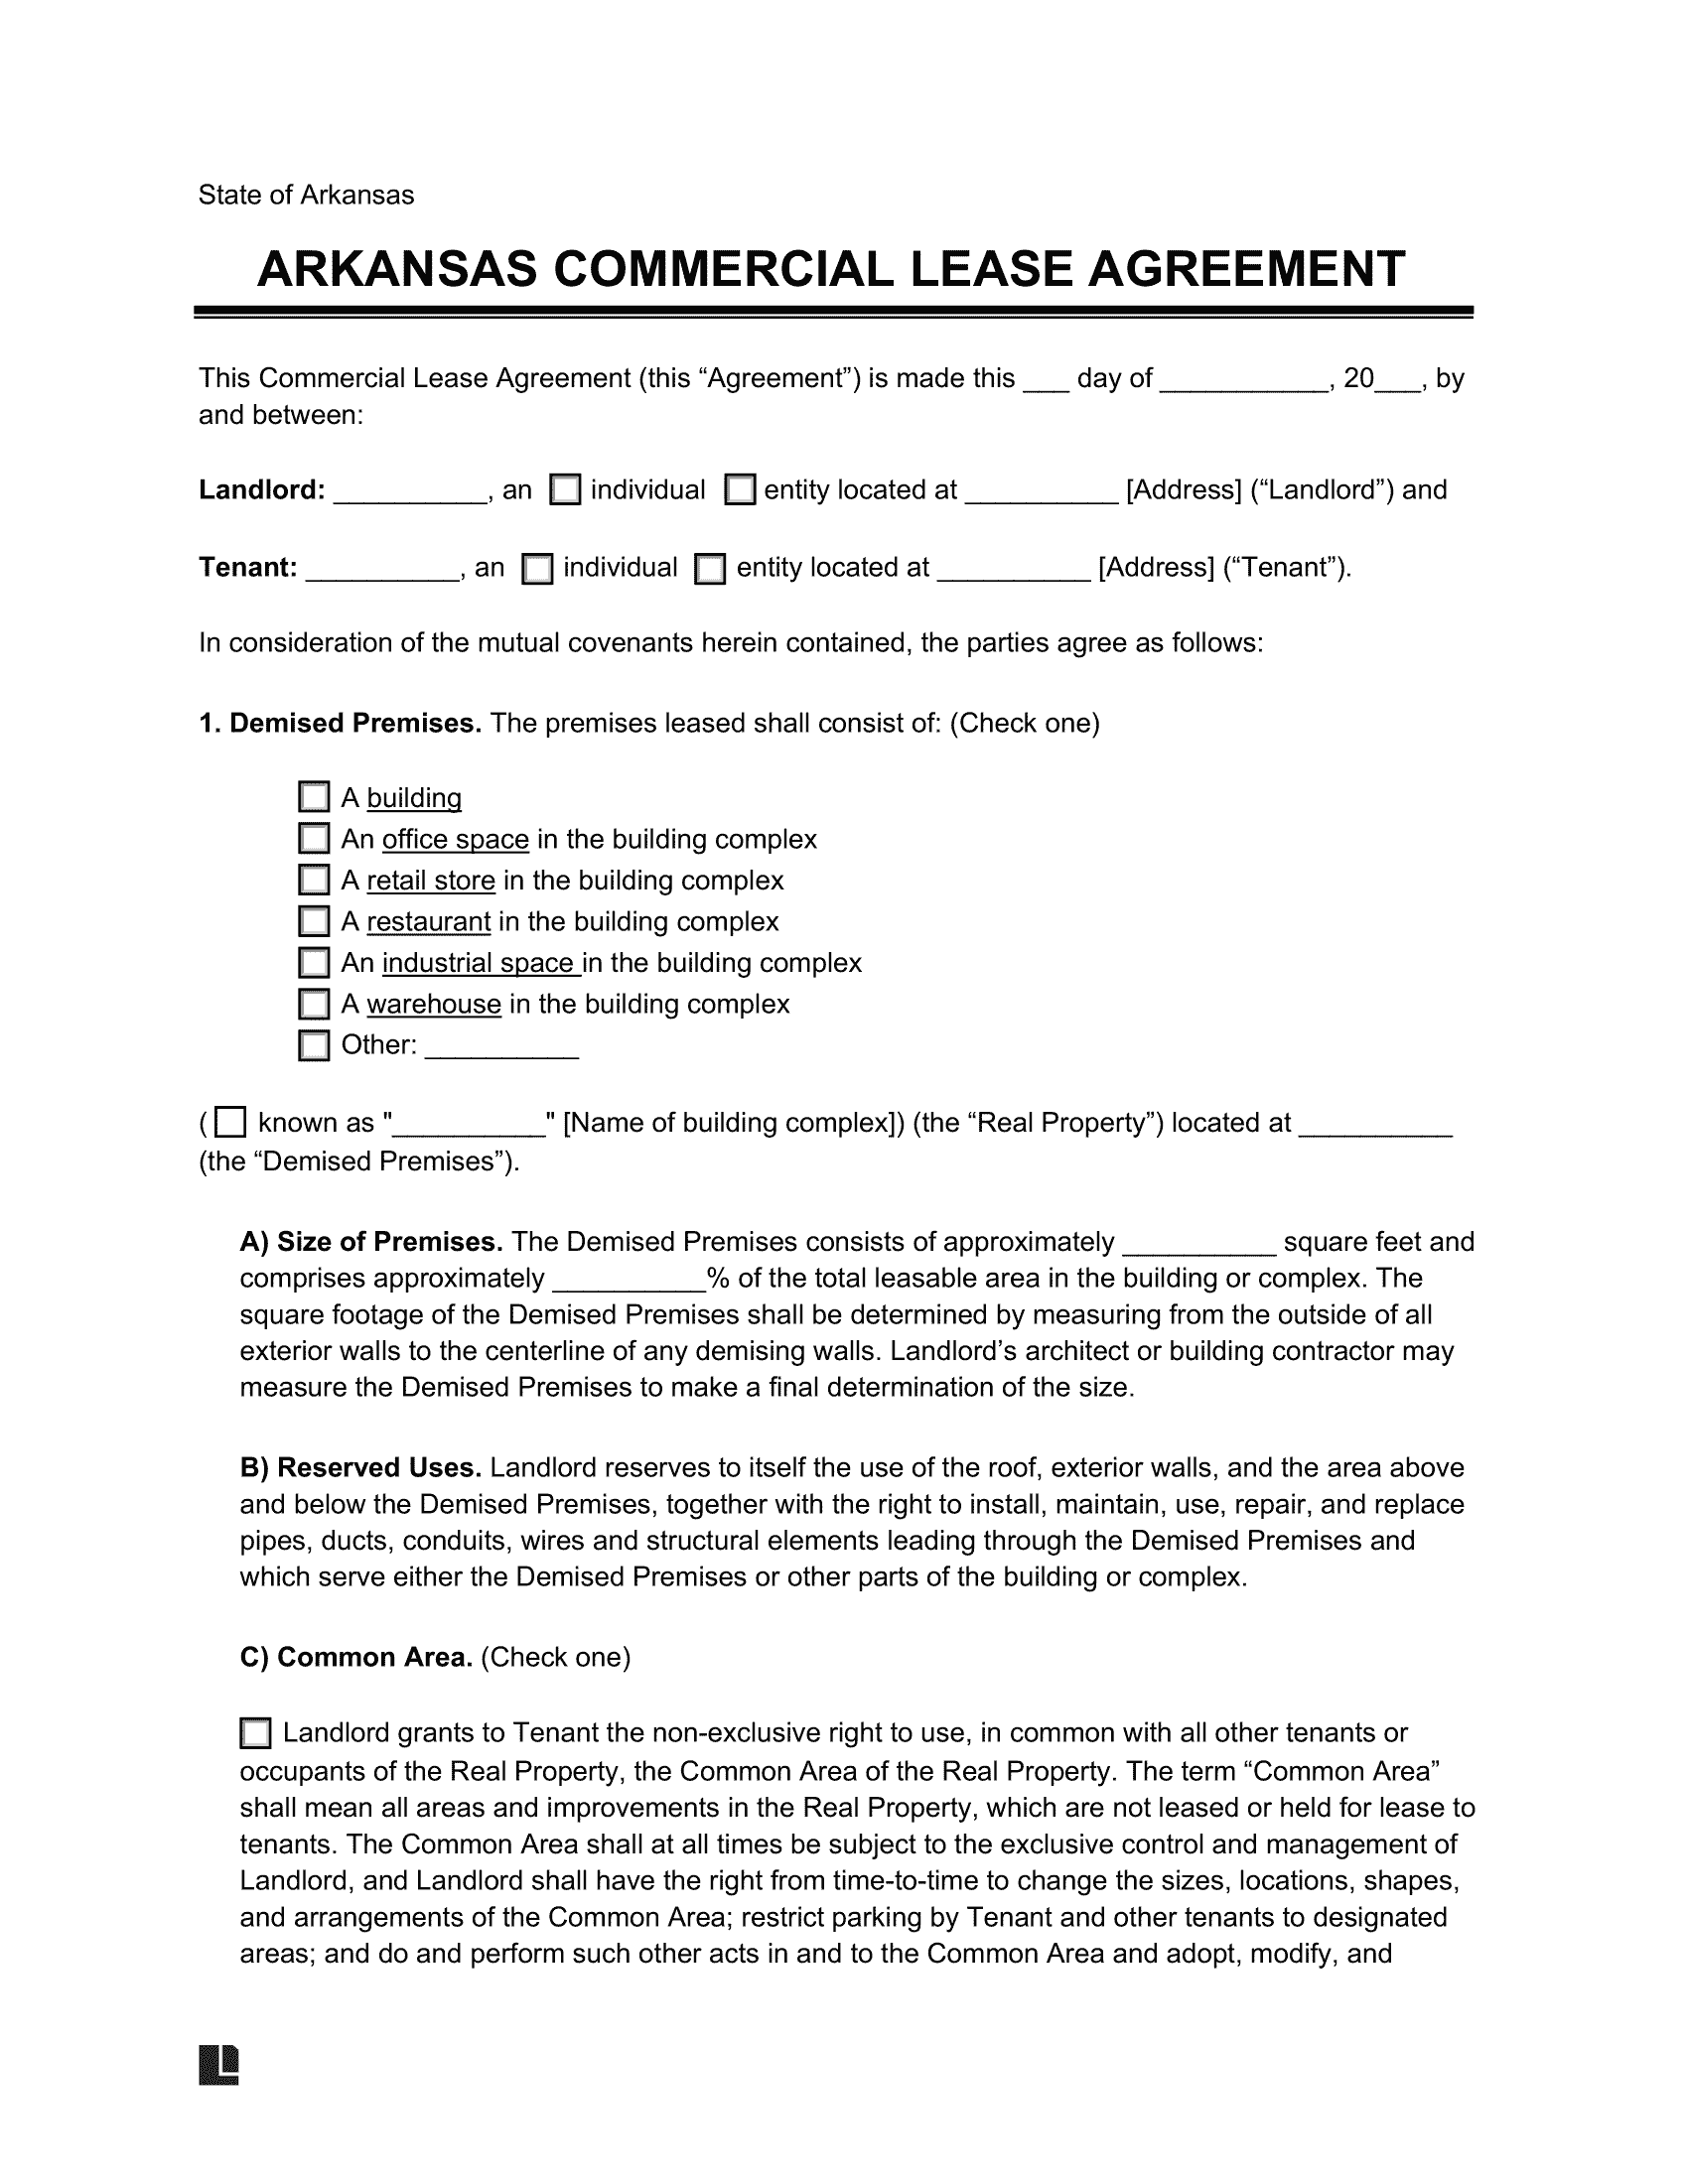 Arkansas Commercial Lease Agreement